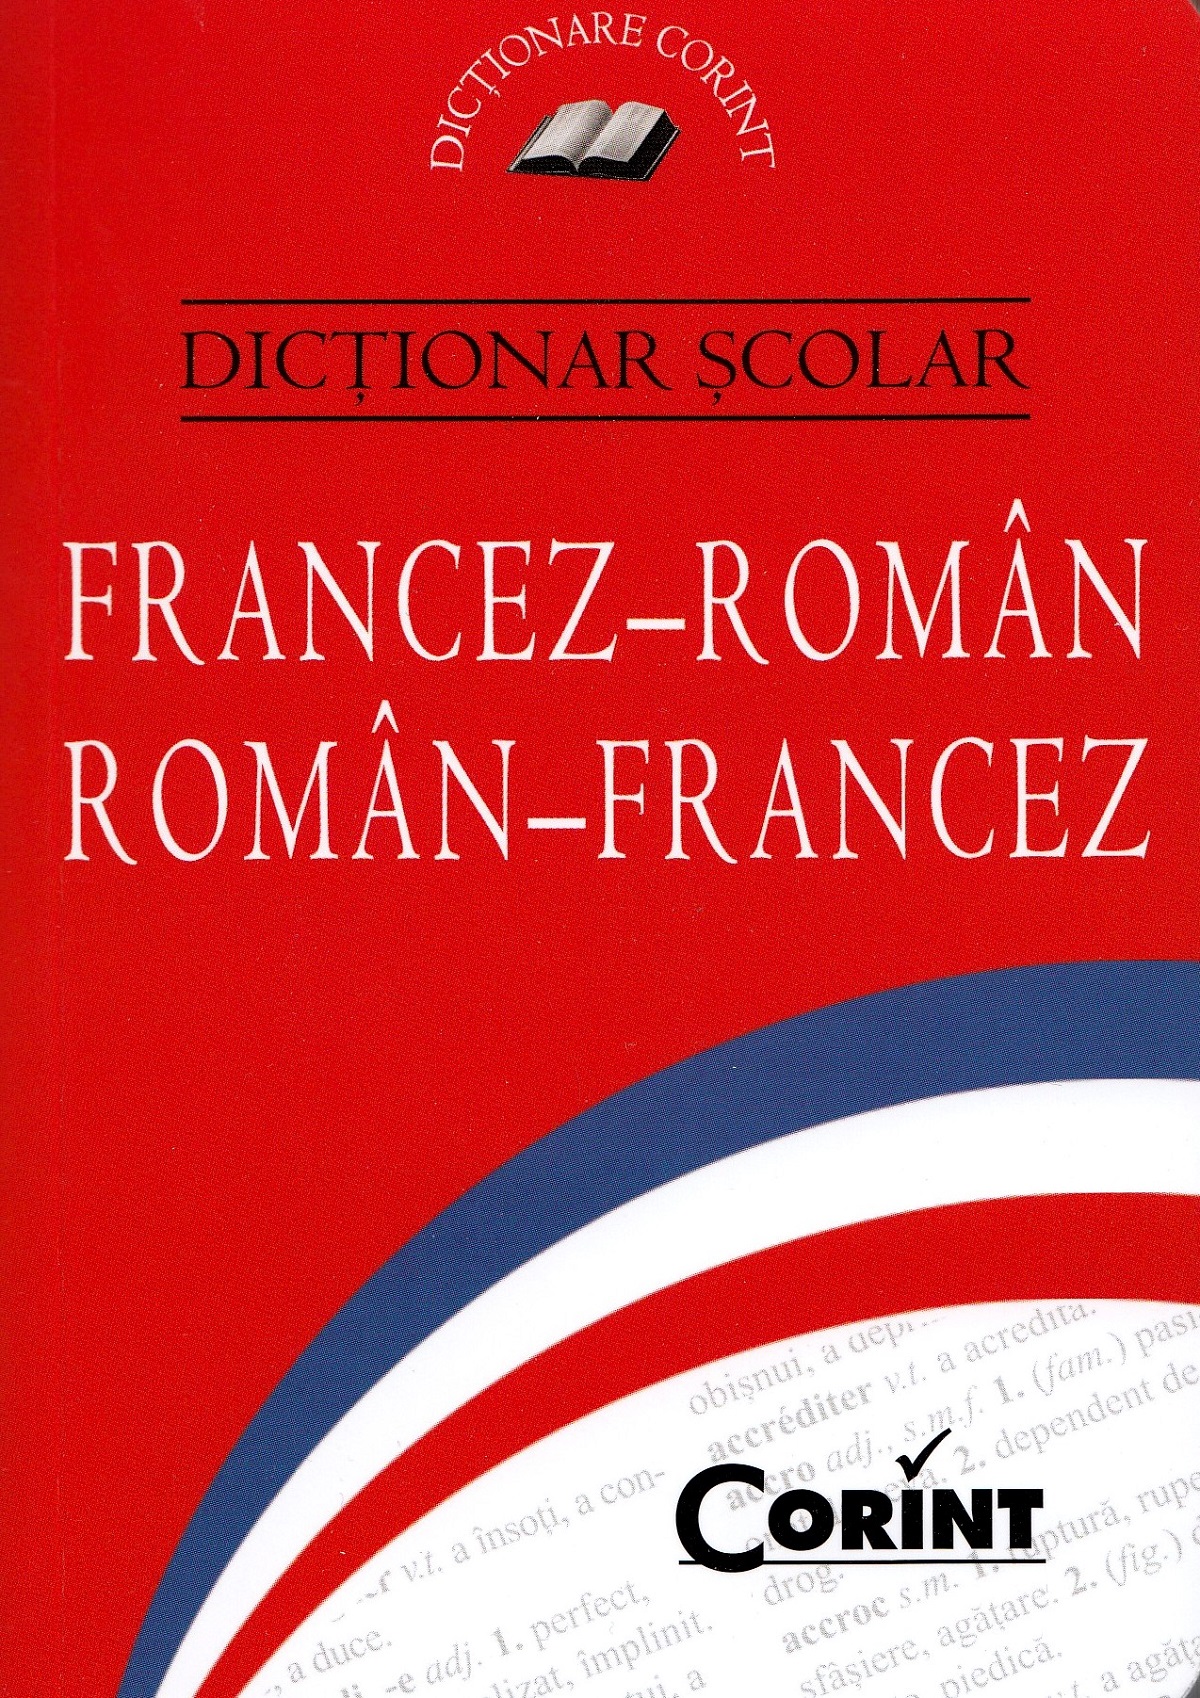 Dictionar scolar francez-roman,  roman-francez